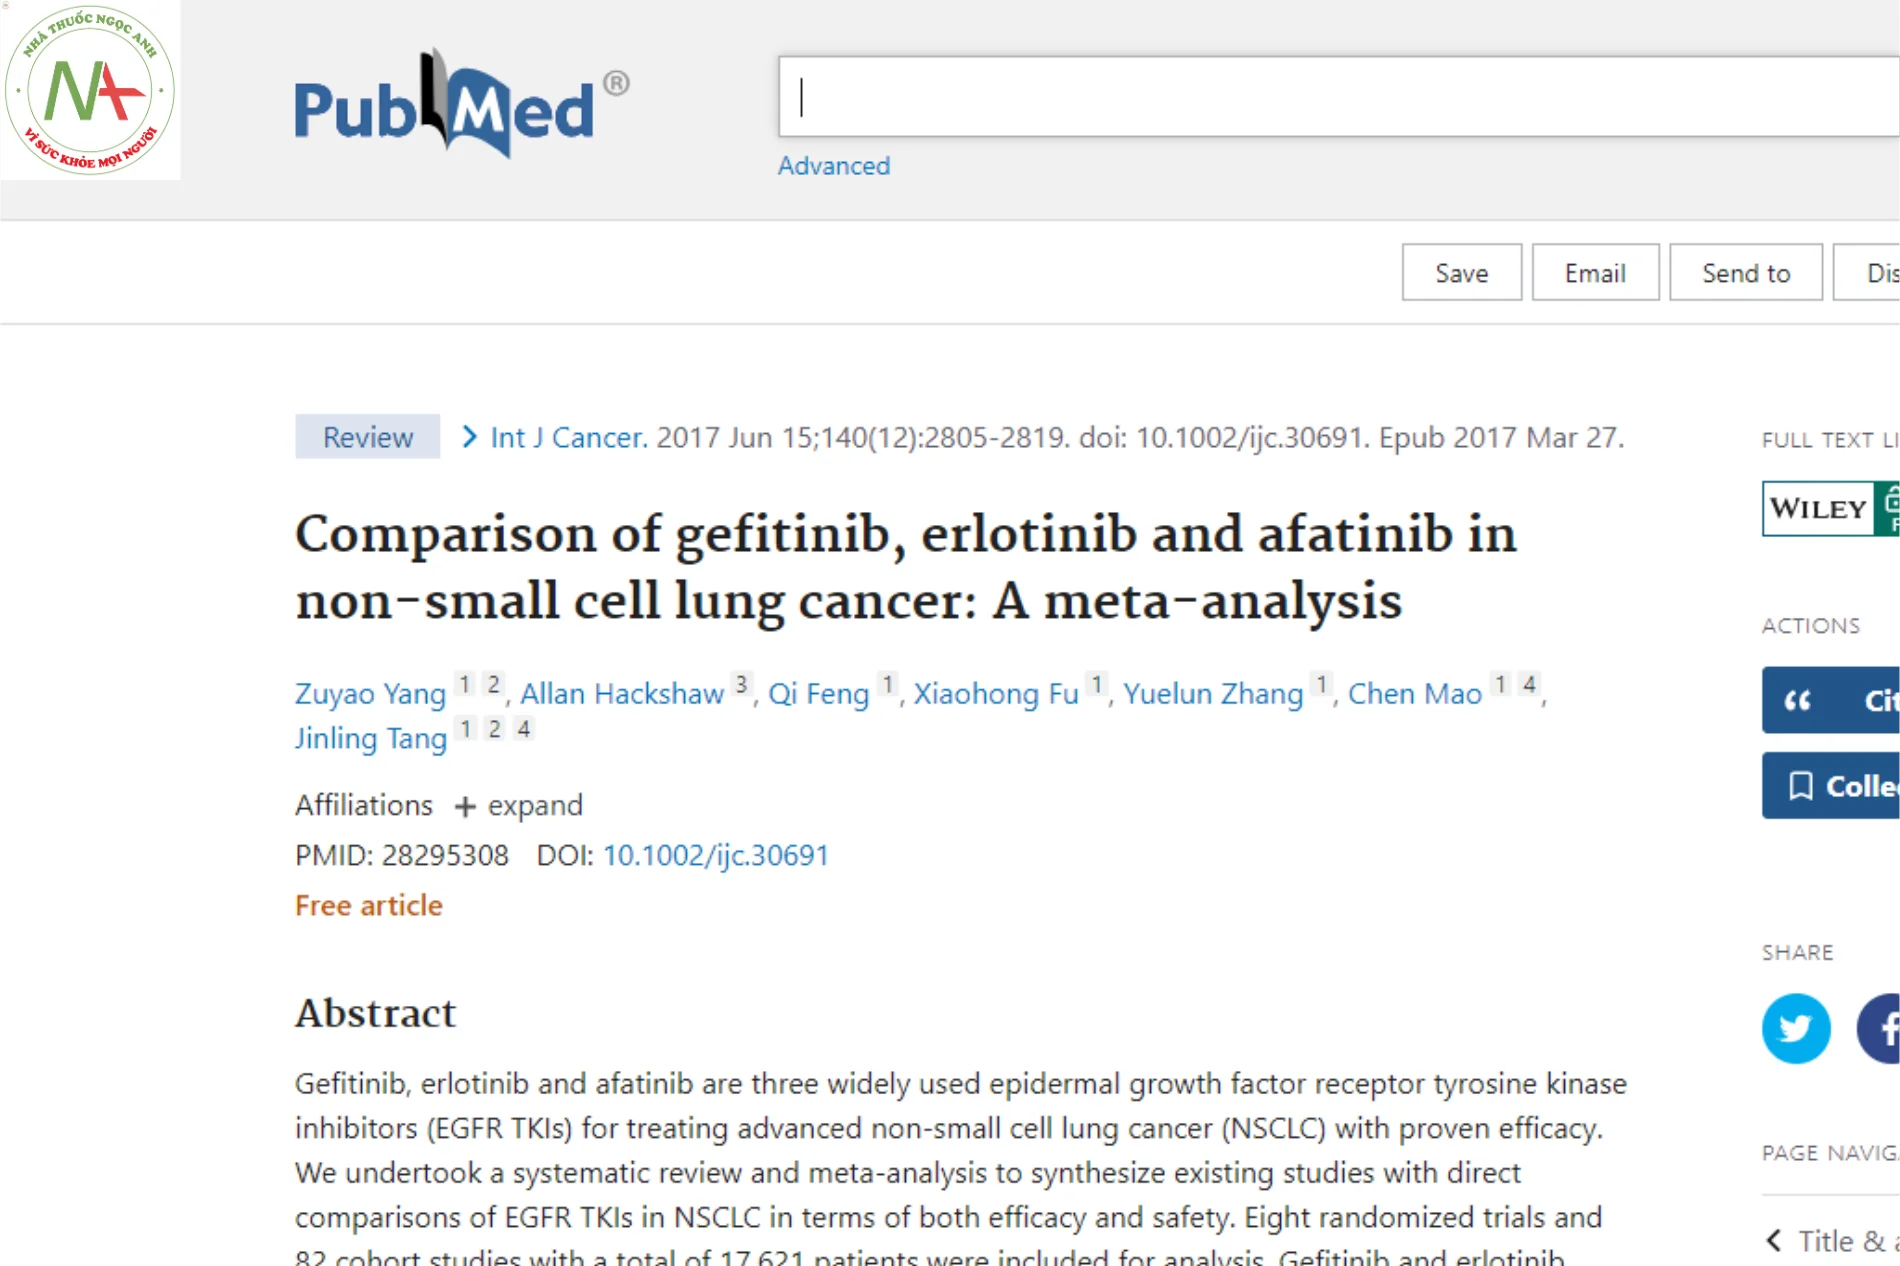 Comparison of gefitinib, erlotinib and afatinib in non-small cell lung cancer